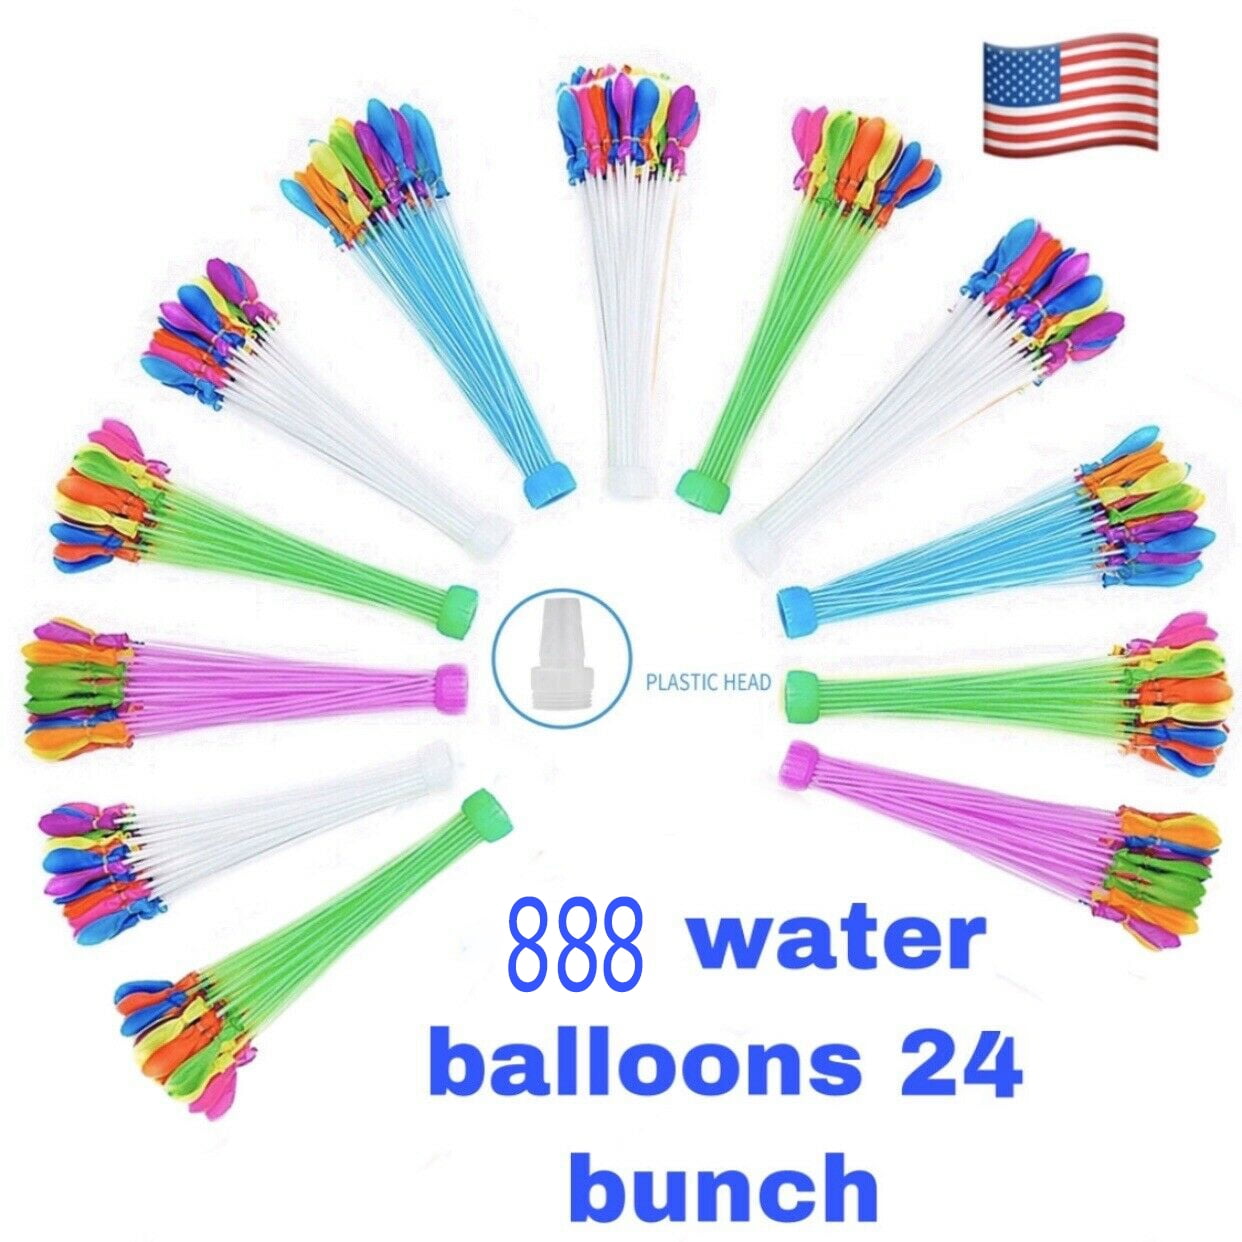 888 Pcs 24 Bunch O Instant water Balloons,Self-Sealing tied waterballon 